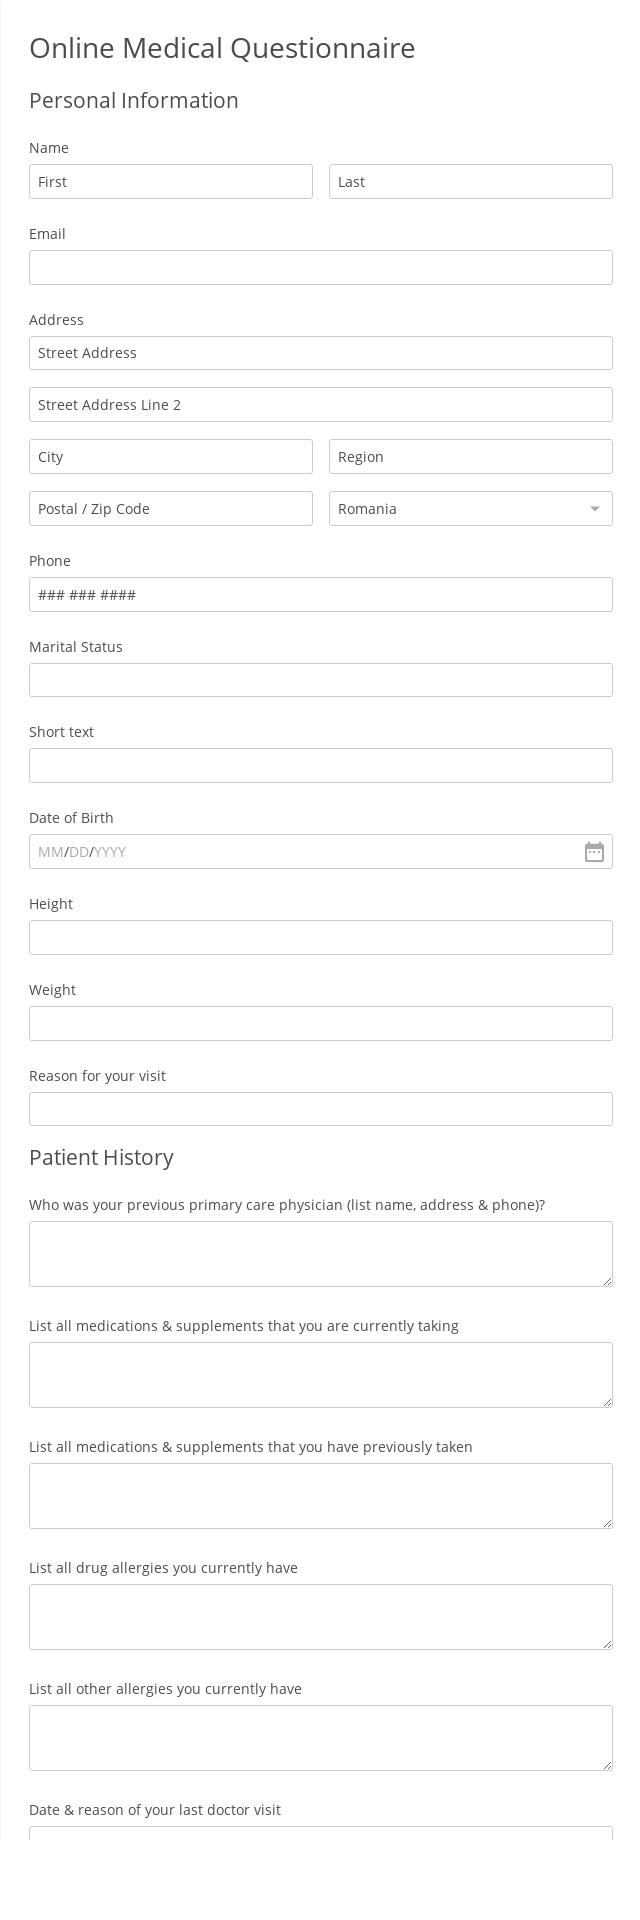 Online Medical Questionnaire